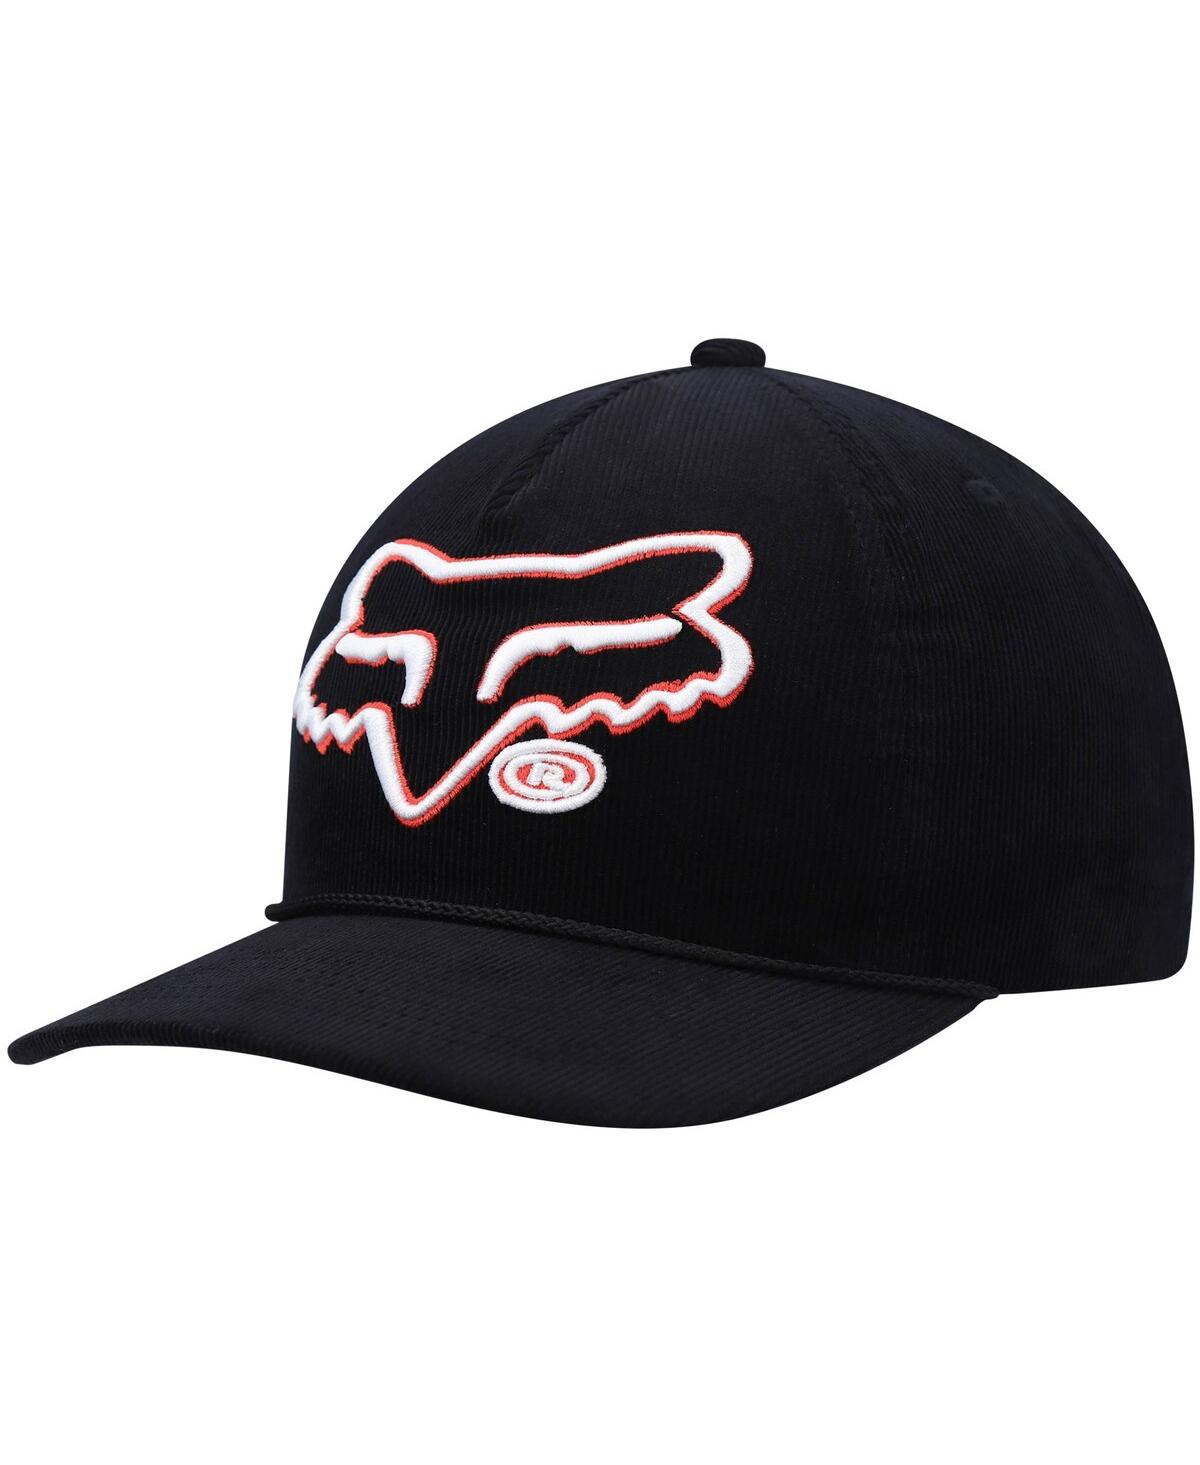 Men's Black Fox Racing Brushed Snapback Hat - Black